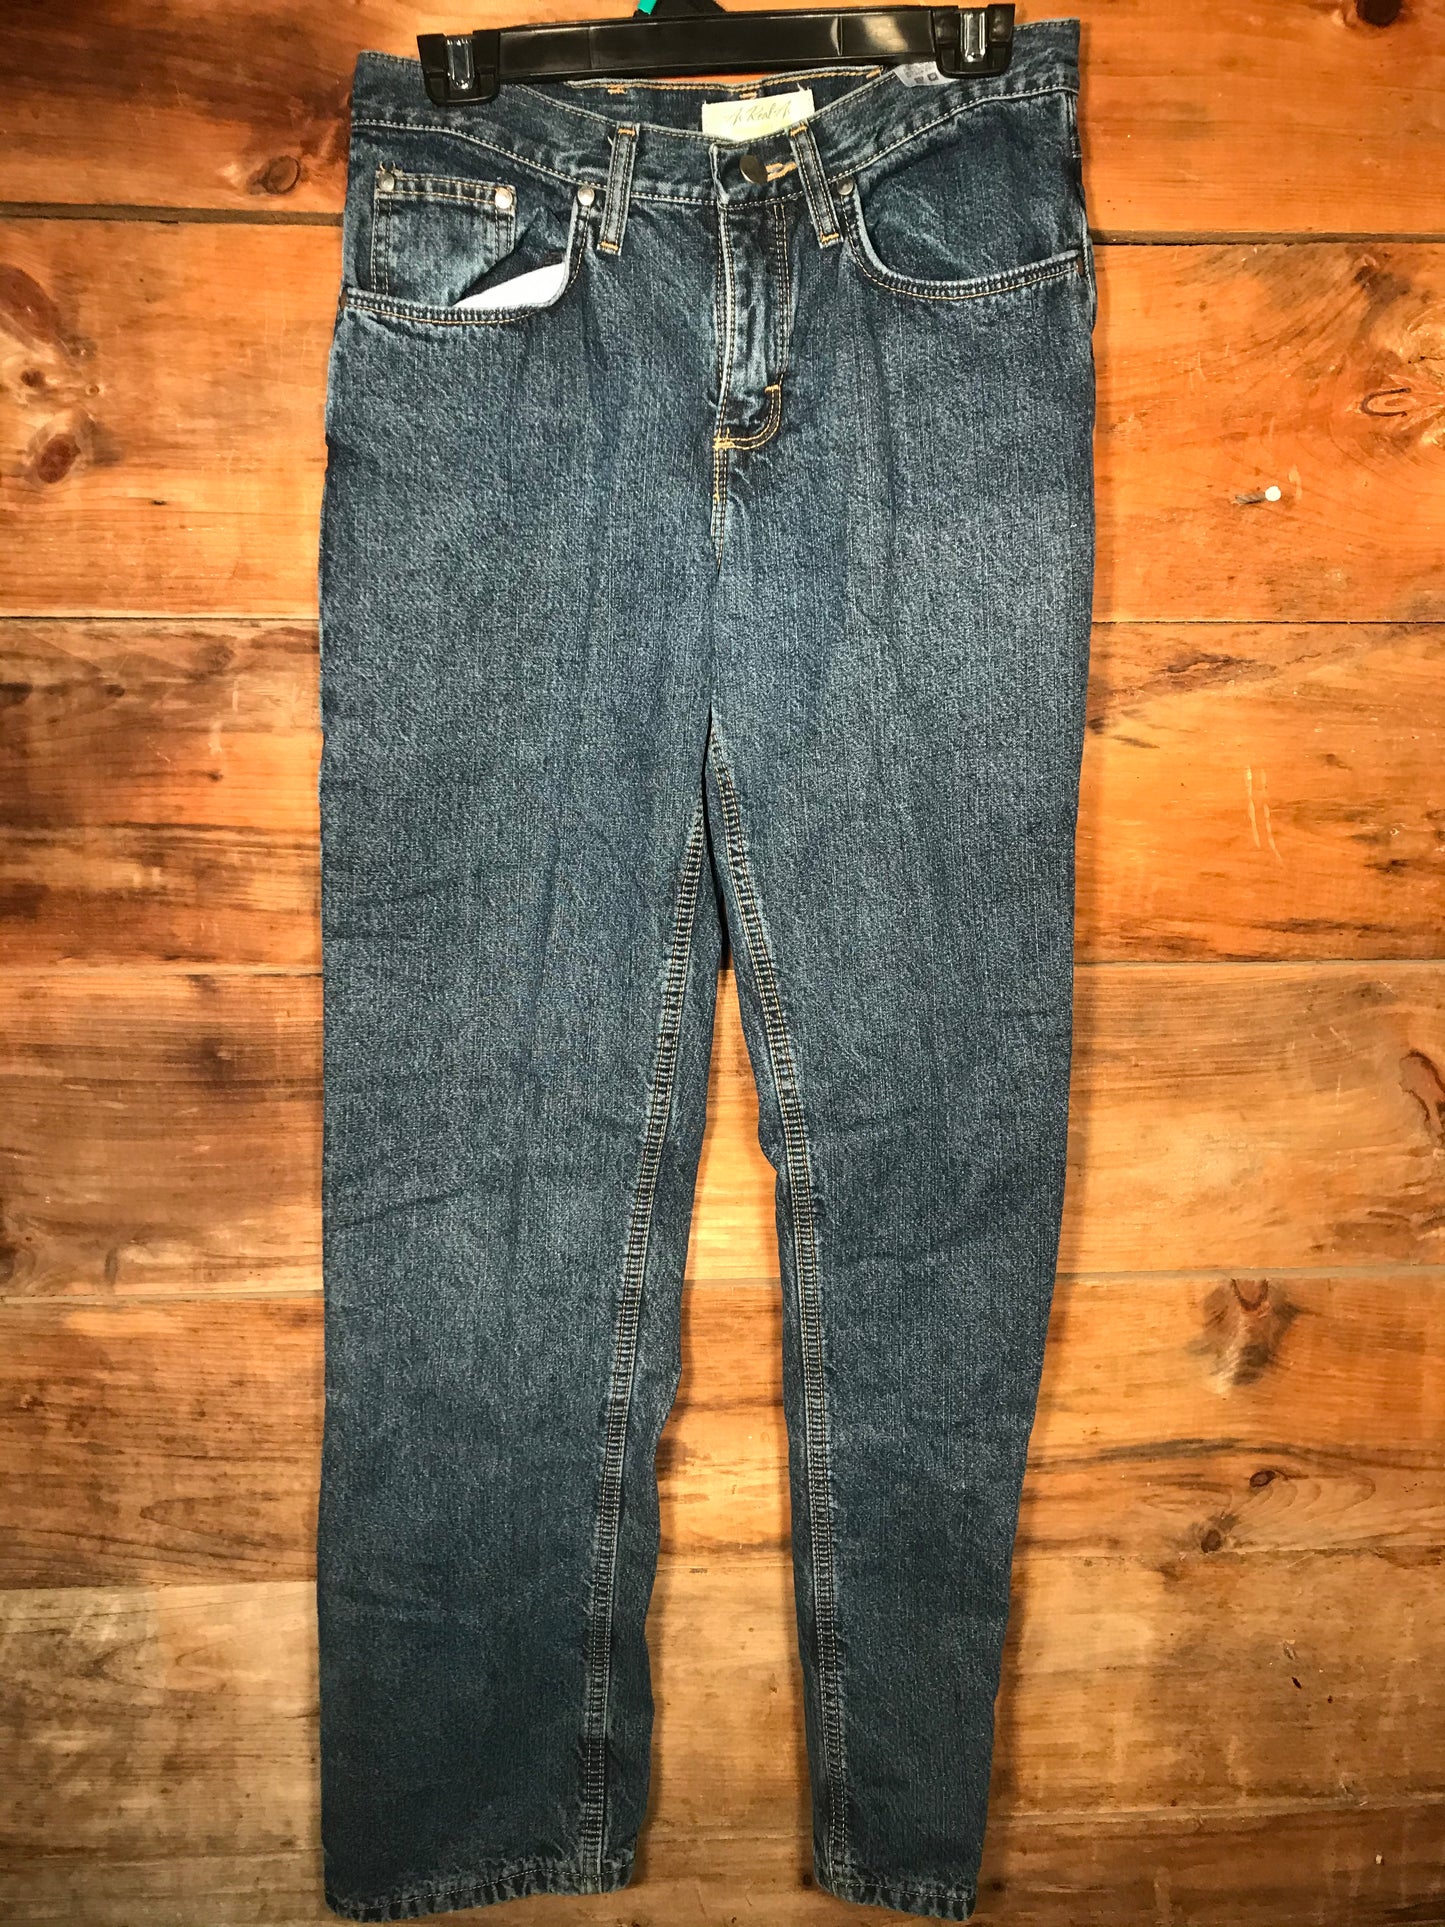 Wrangler fleece lined size 6x34 jeans